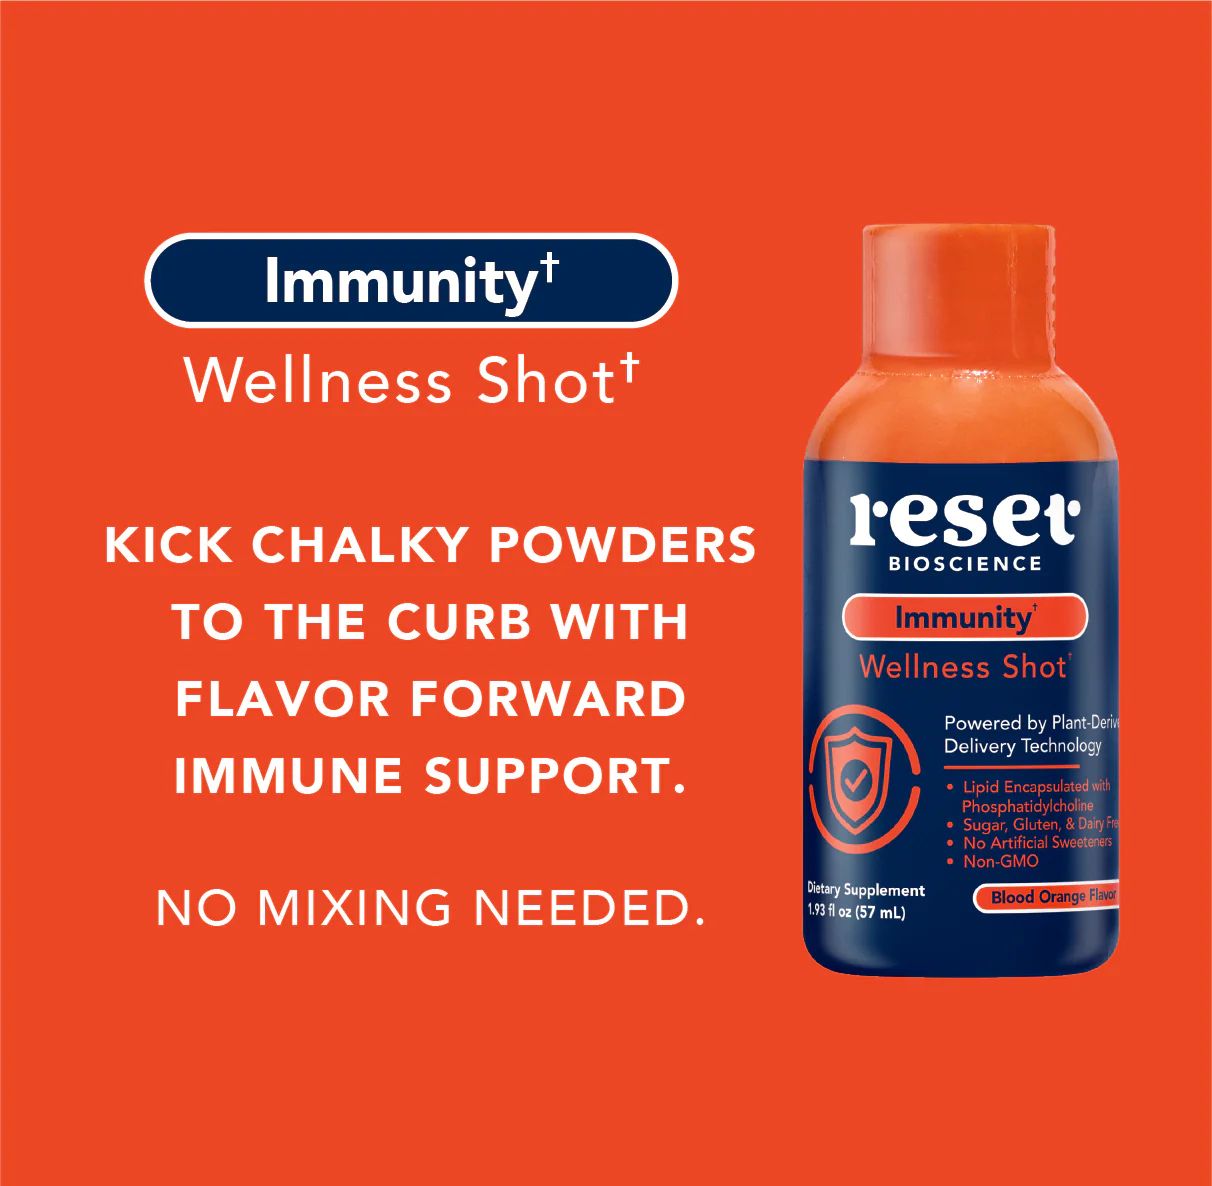 Immunity Wellness Shots offer comprehensive immune support in a keto friendly, non-GMO 
blood ora... | RESET Bioscience